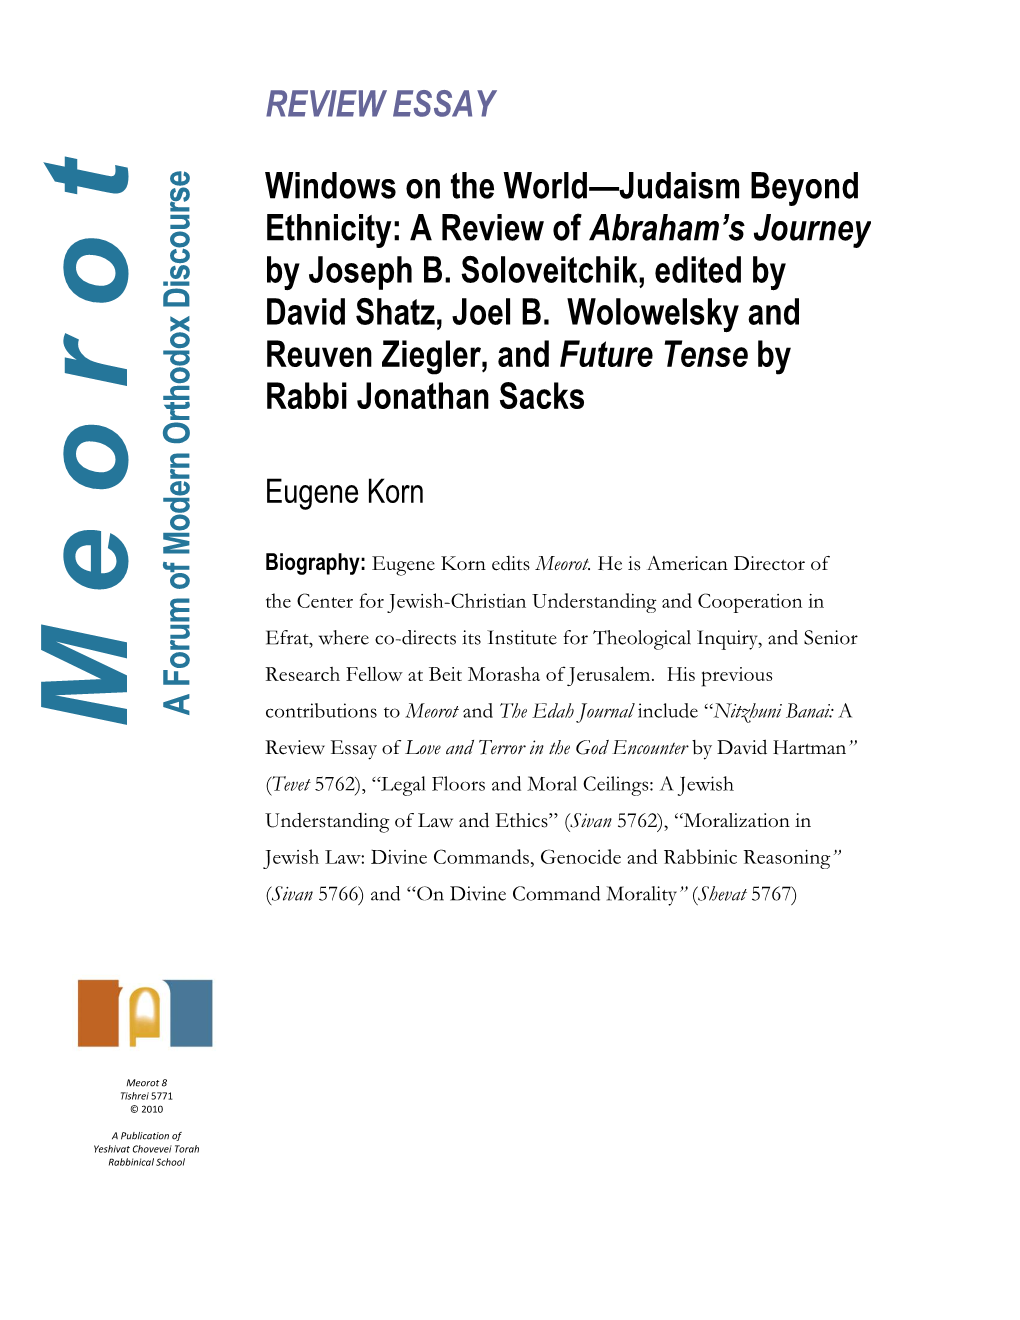 Windows on the World: Abraham's Journey by Rabbi Joseph B